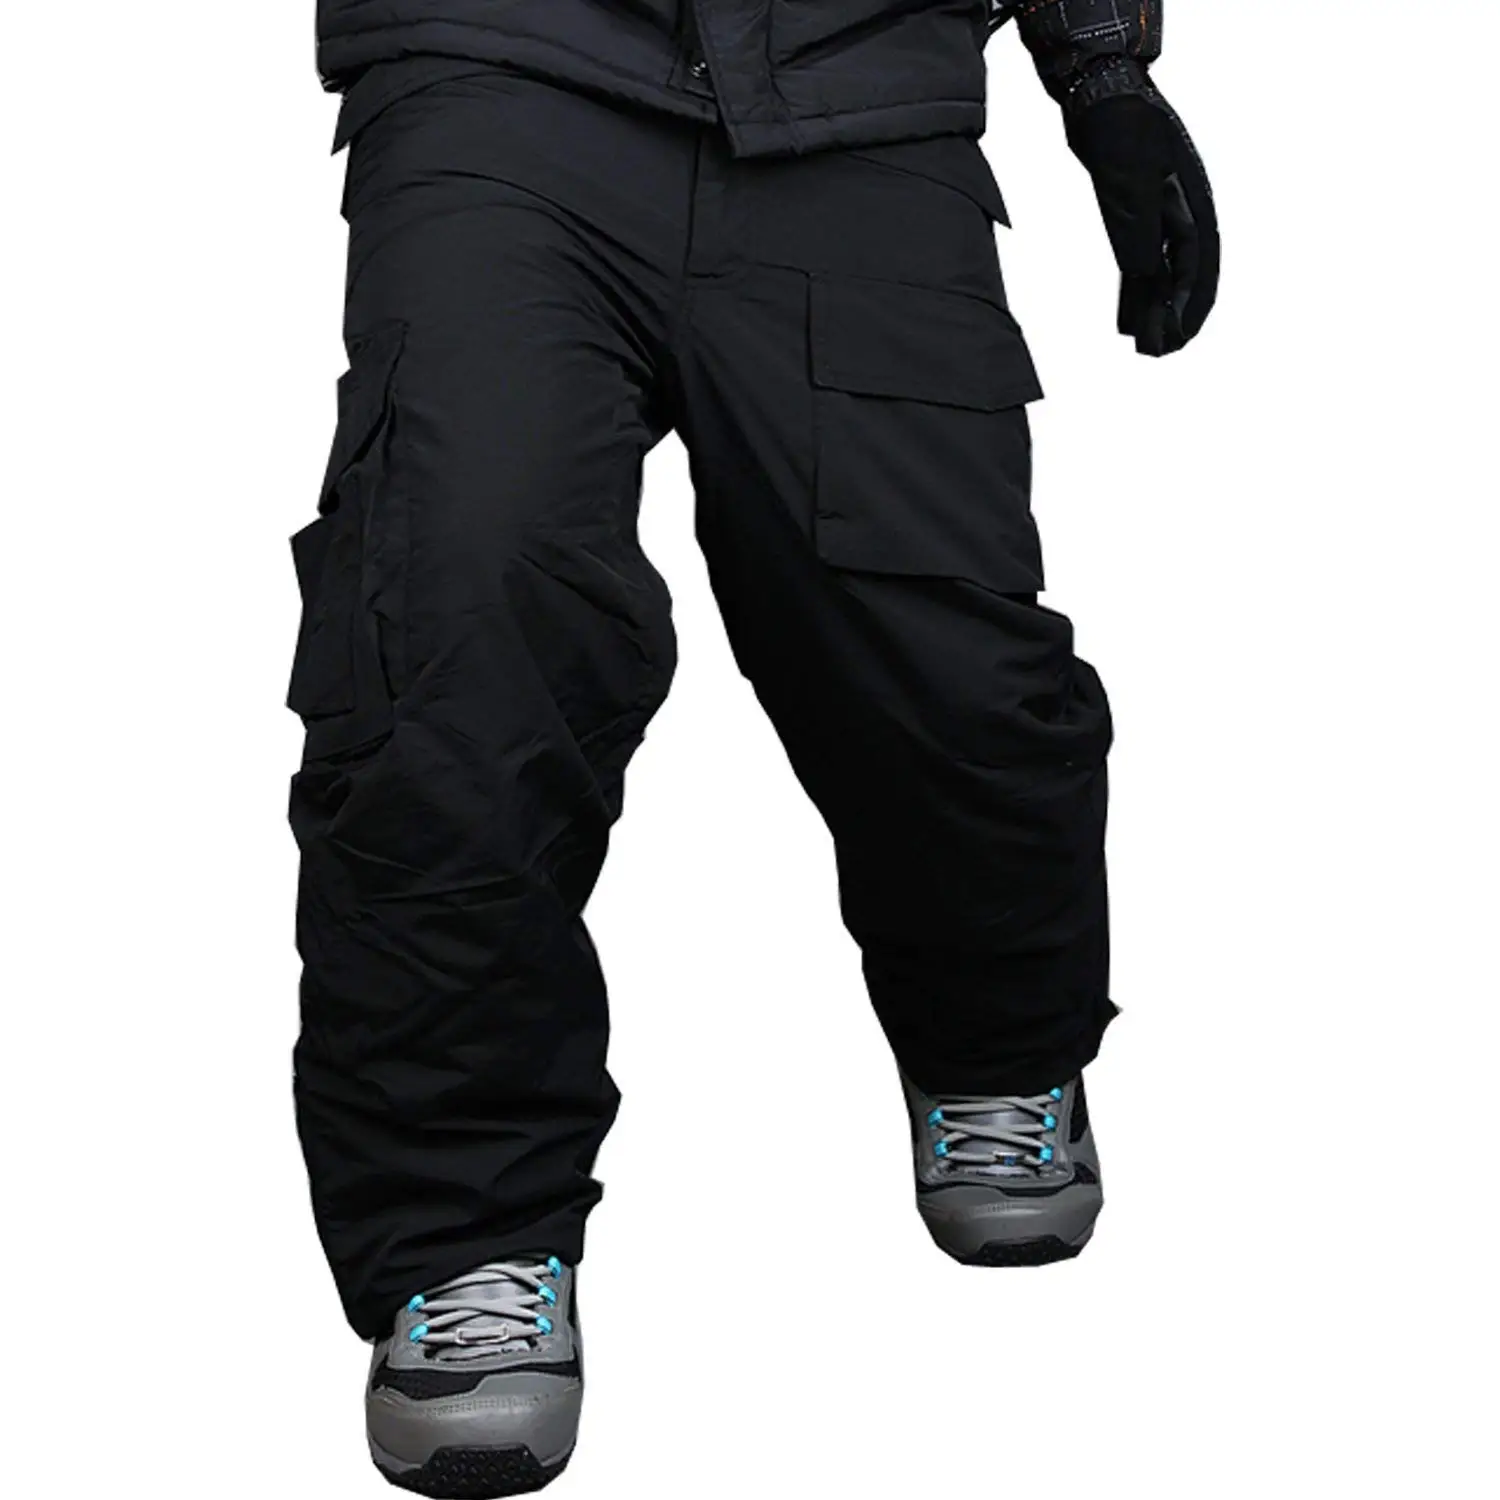 Cheap Camo Snowboard Pants, find Camo Snowboard Pants deals on line at Alibaba.com